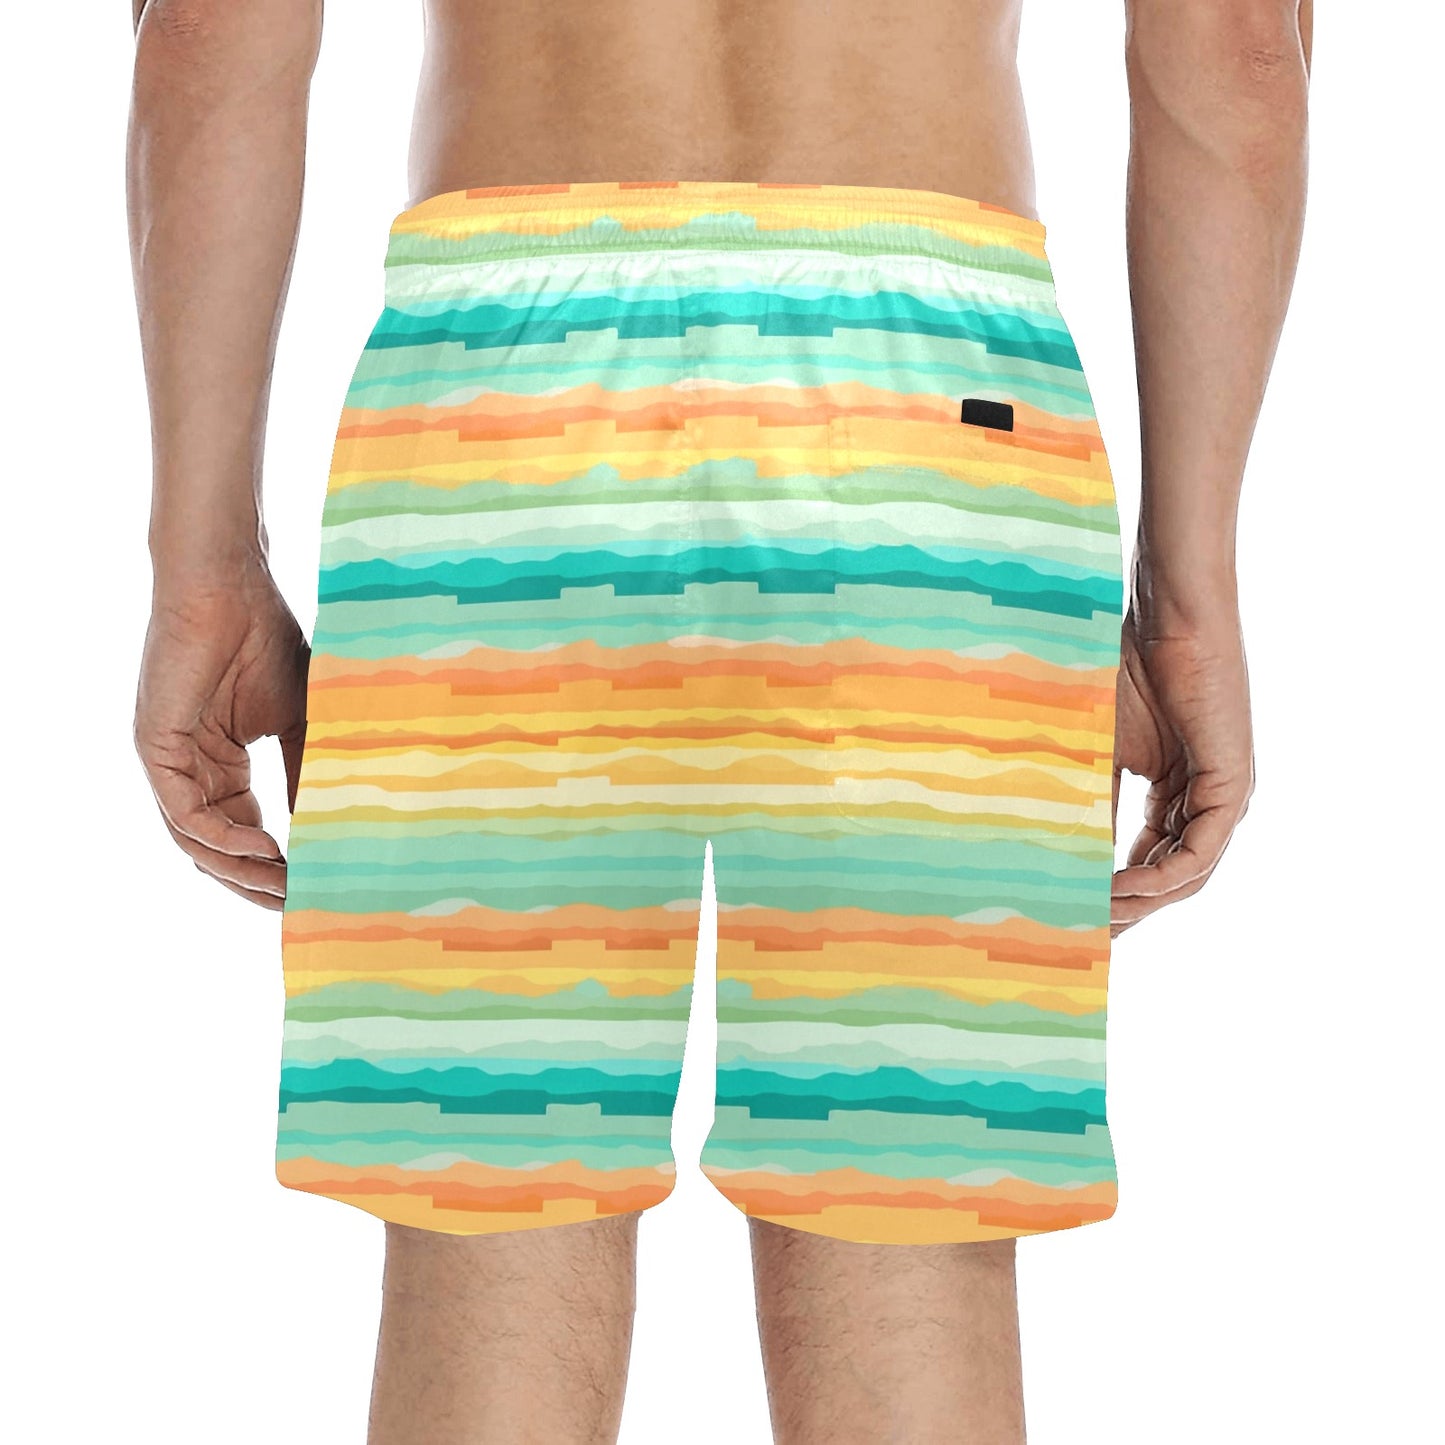 Striped Men Swim Trunks, Green Yellow Mid Length Shorts Beach Pockets Mesh Lining Drawstring Boys Casual Bathing Suit Plus Size Swimwear Starcove Fashion